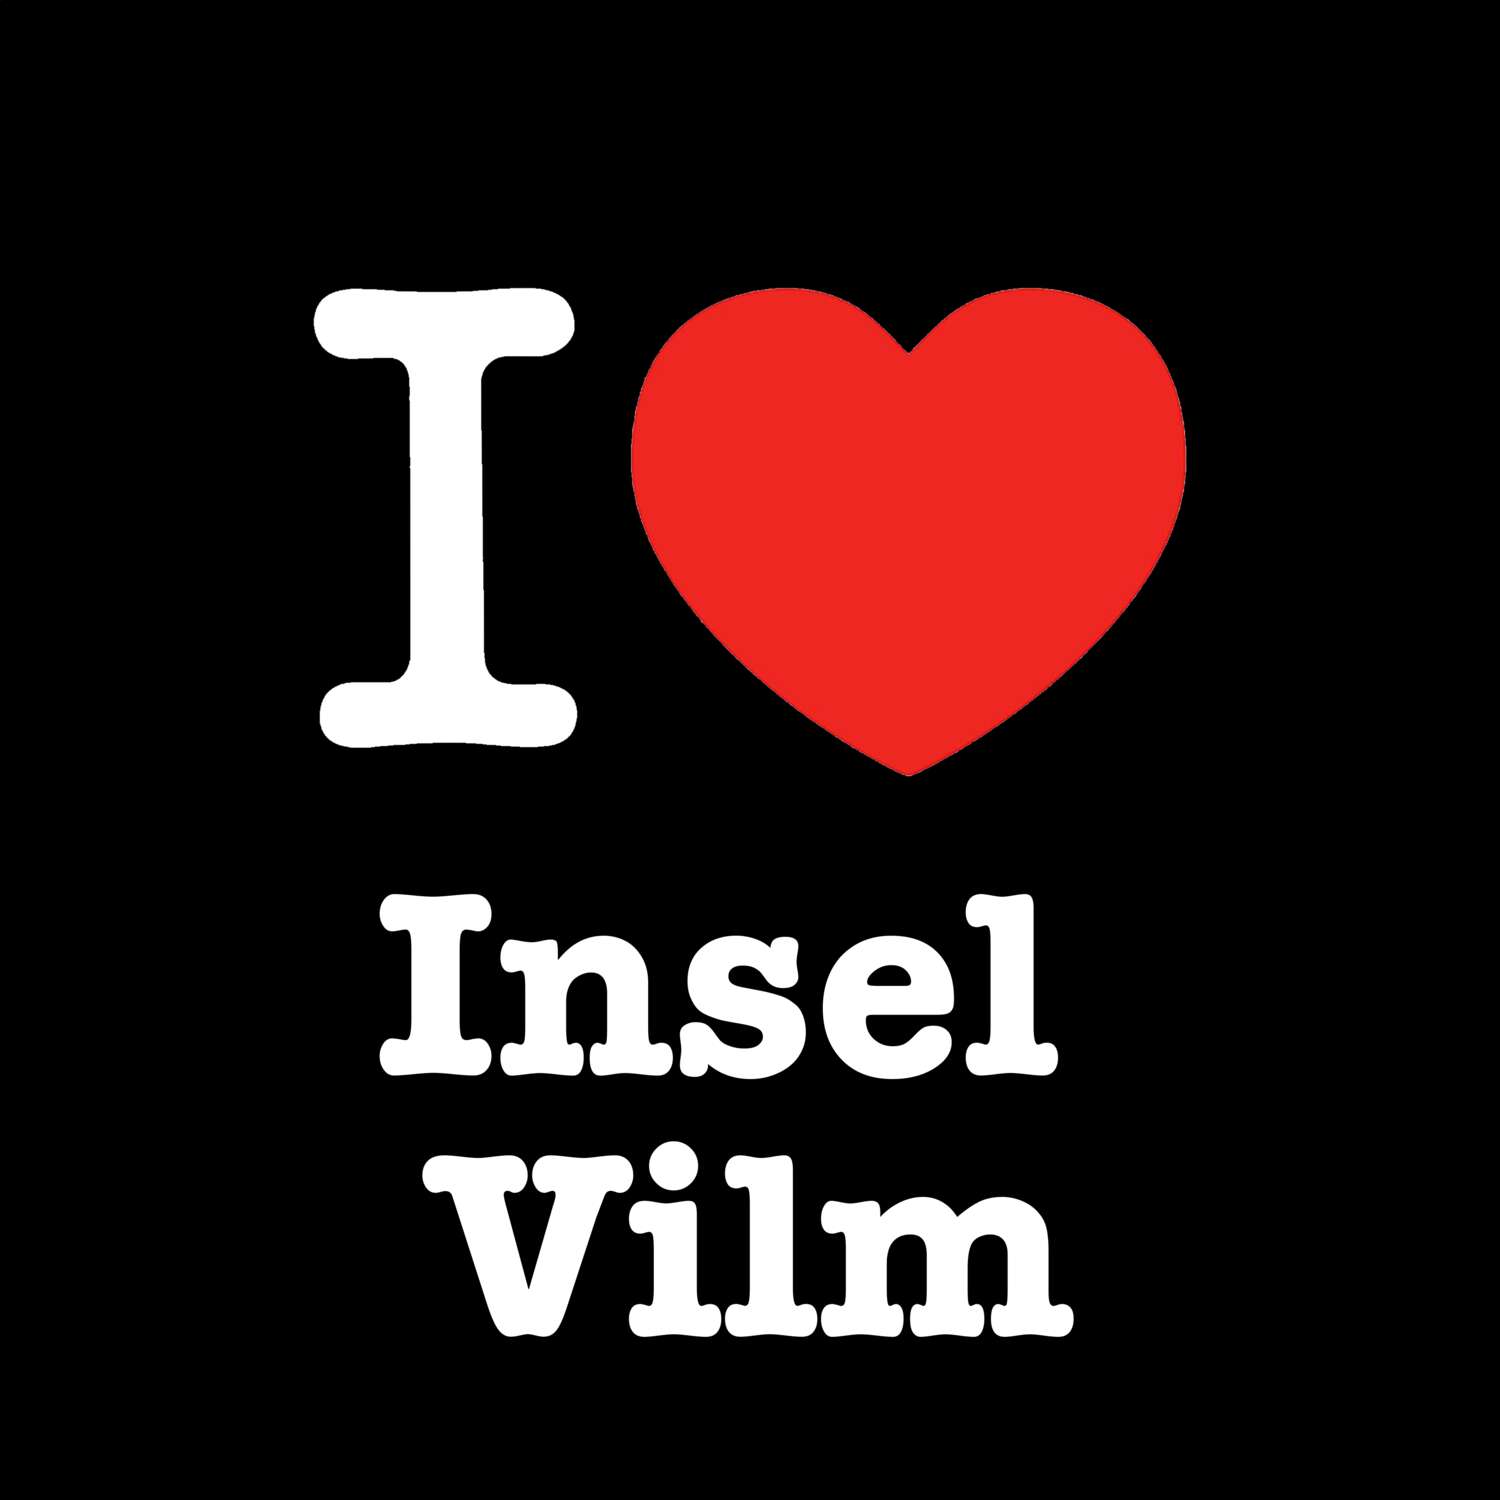 Insel Vilm T-Shirt »I love«